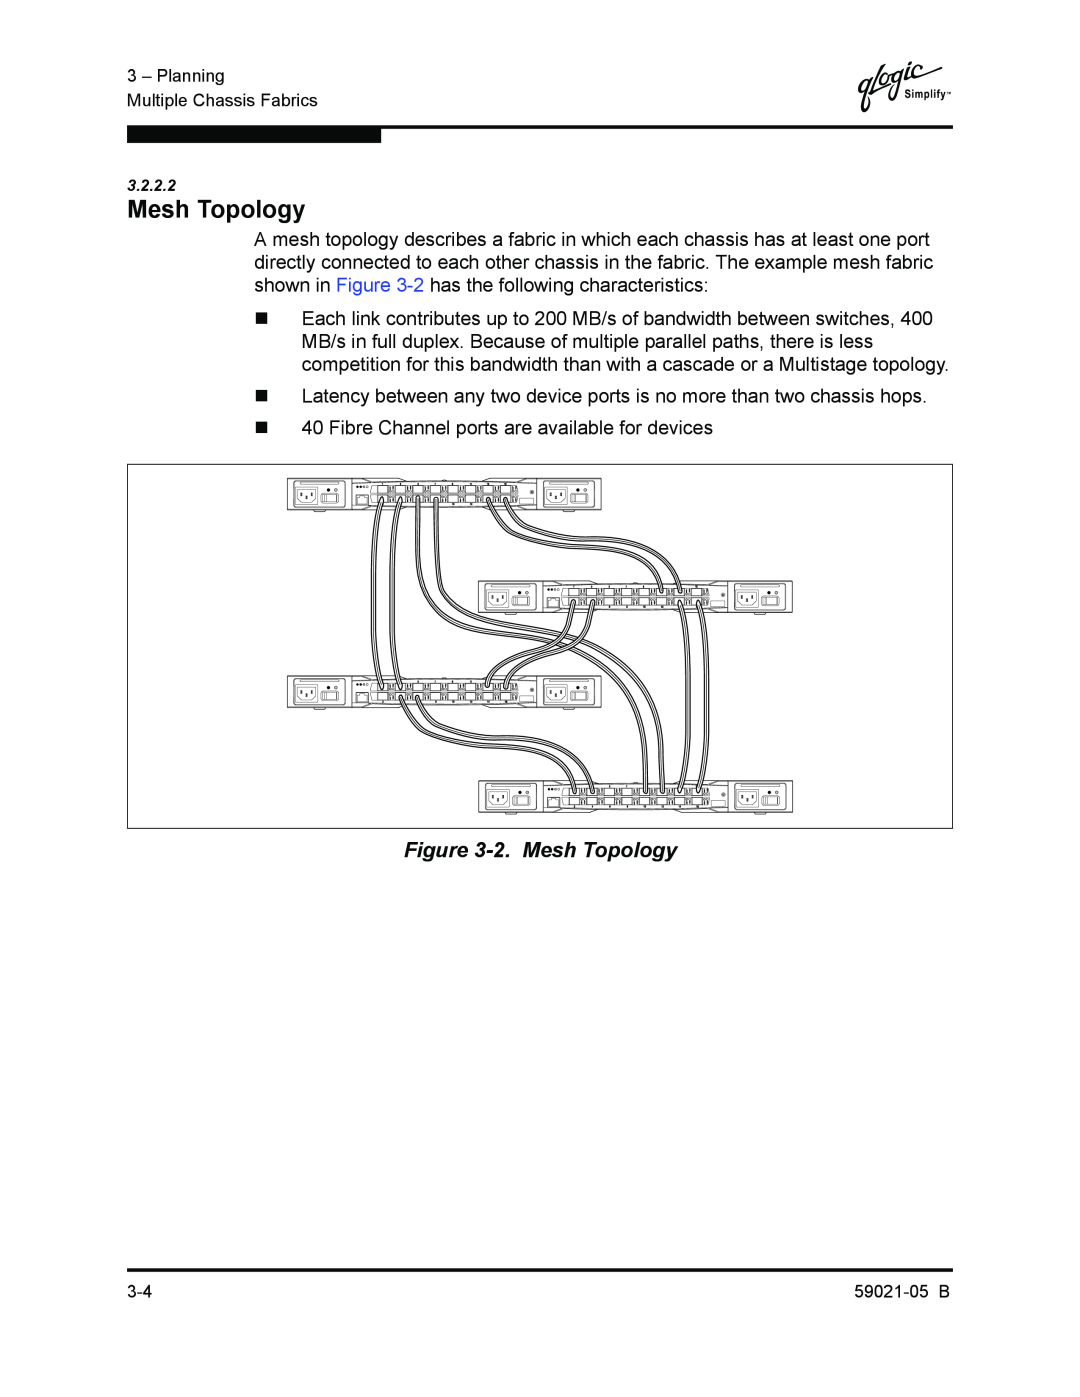 Q-Logic 59021-05 B manual 2. Mesh Topology 